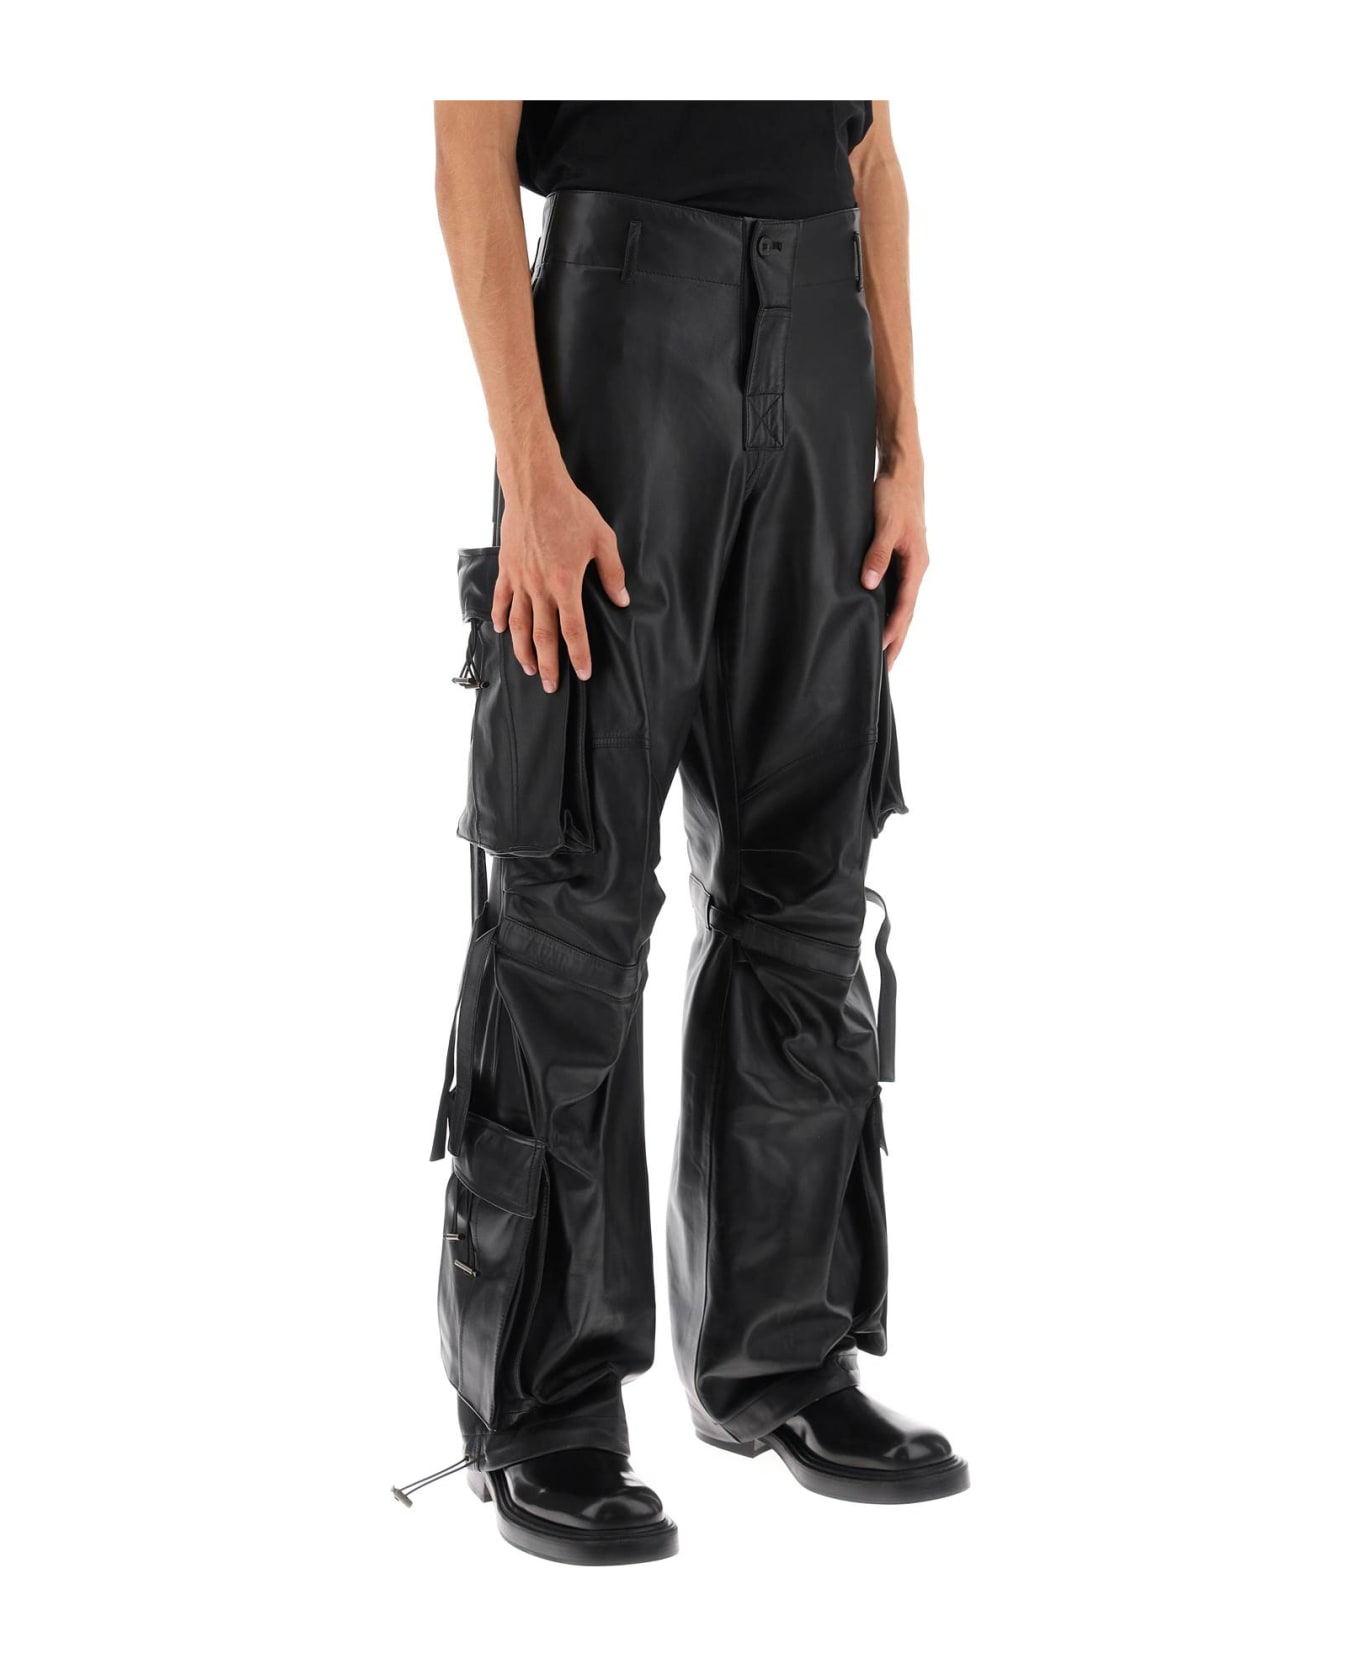 DARKPARK Luis Lamb-leather Cargo Pants - BLACK (Black)